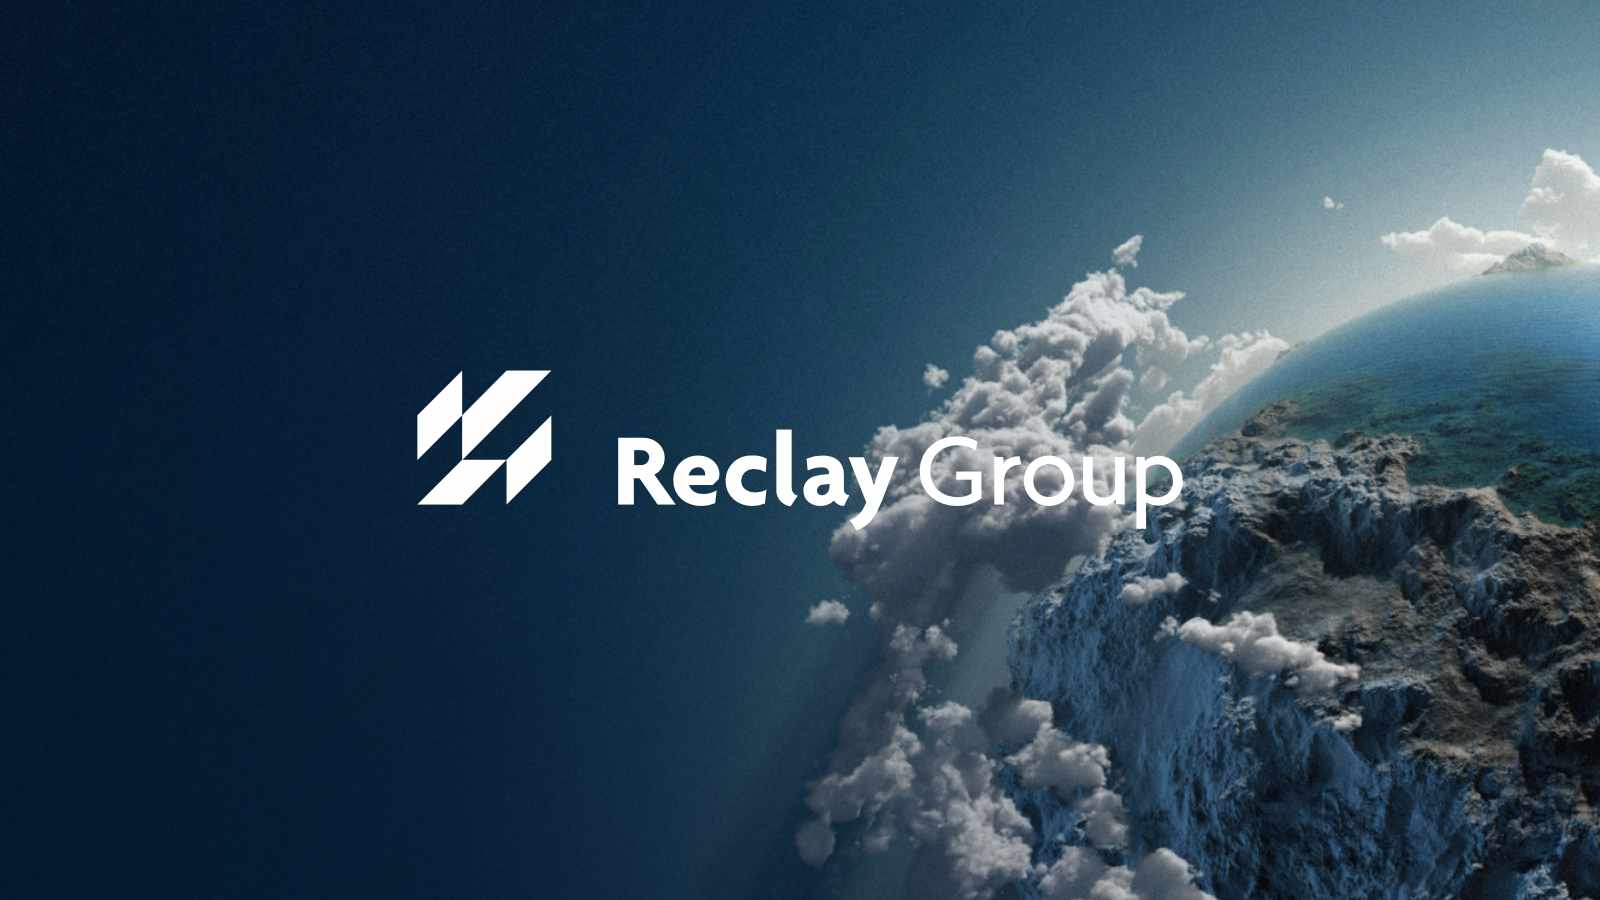 Reclay Group